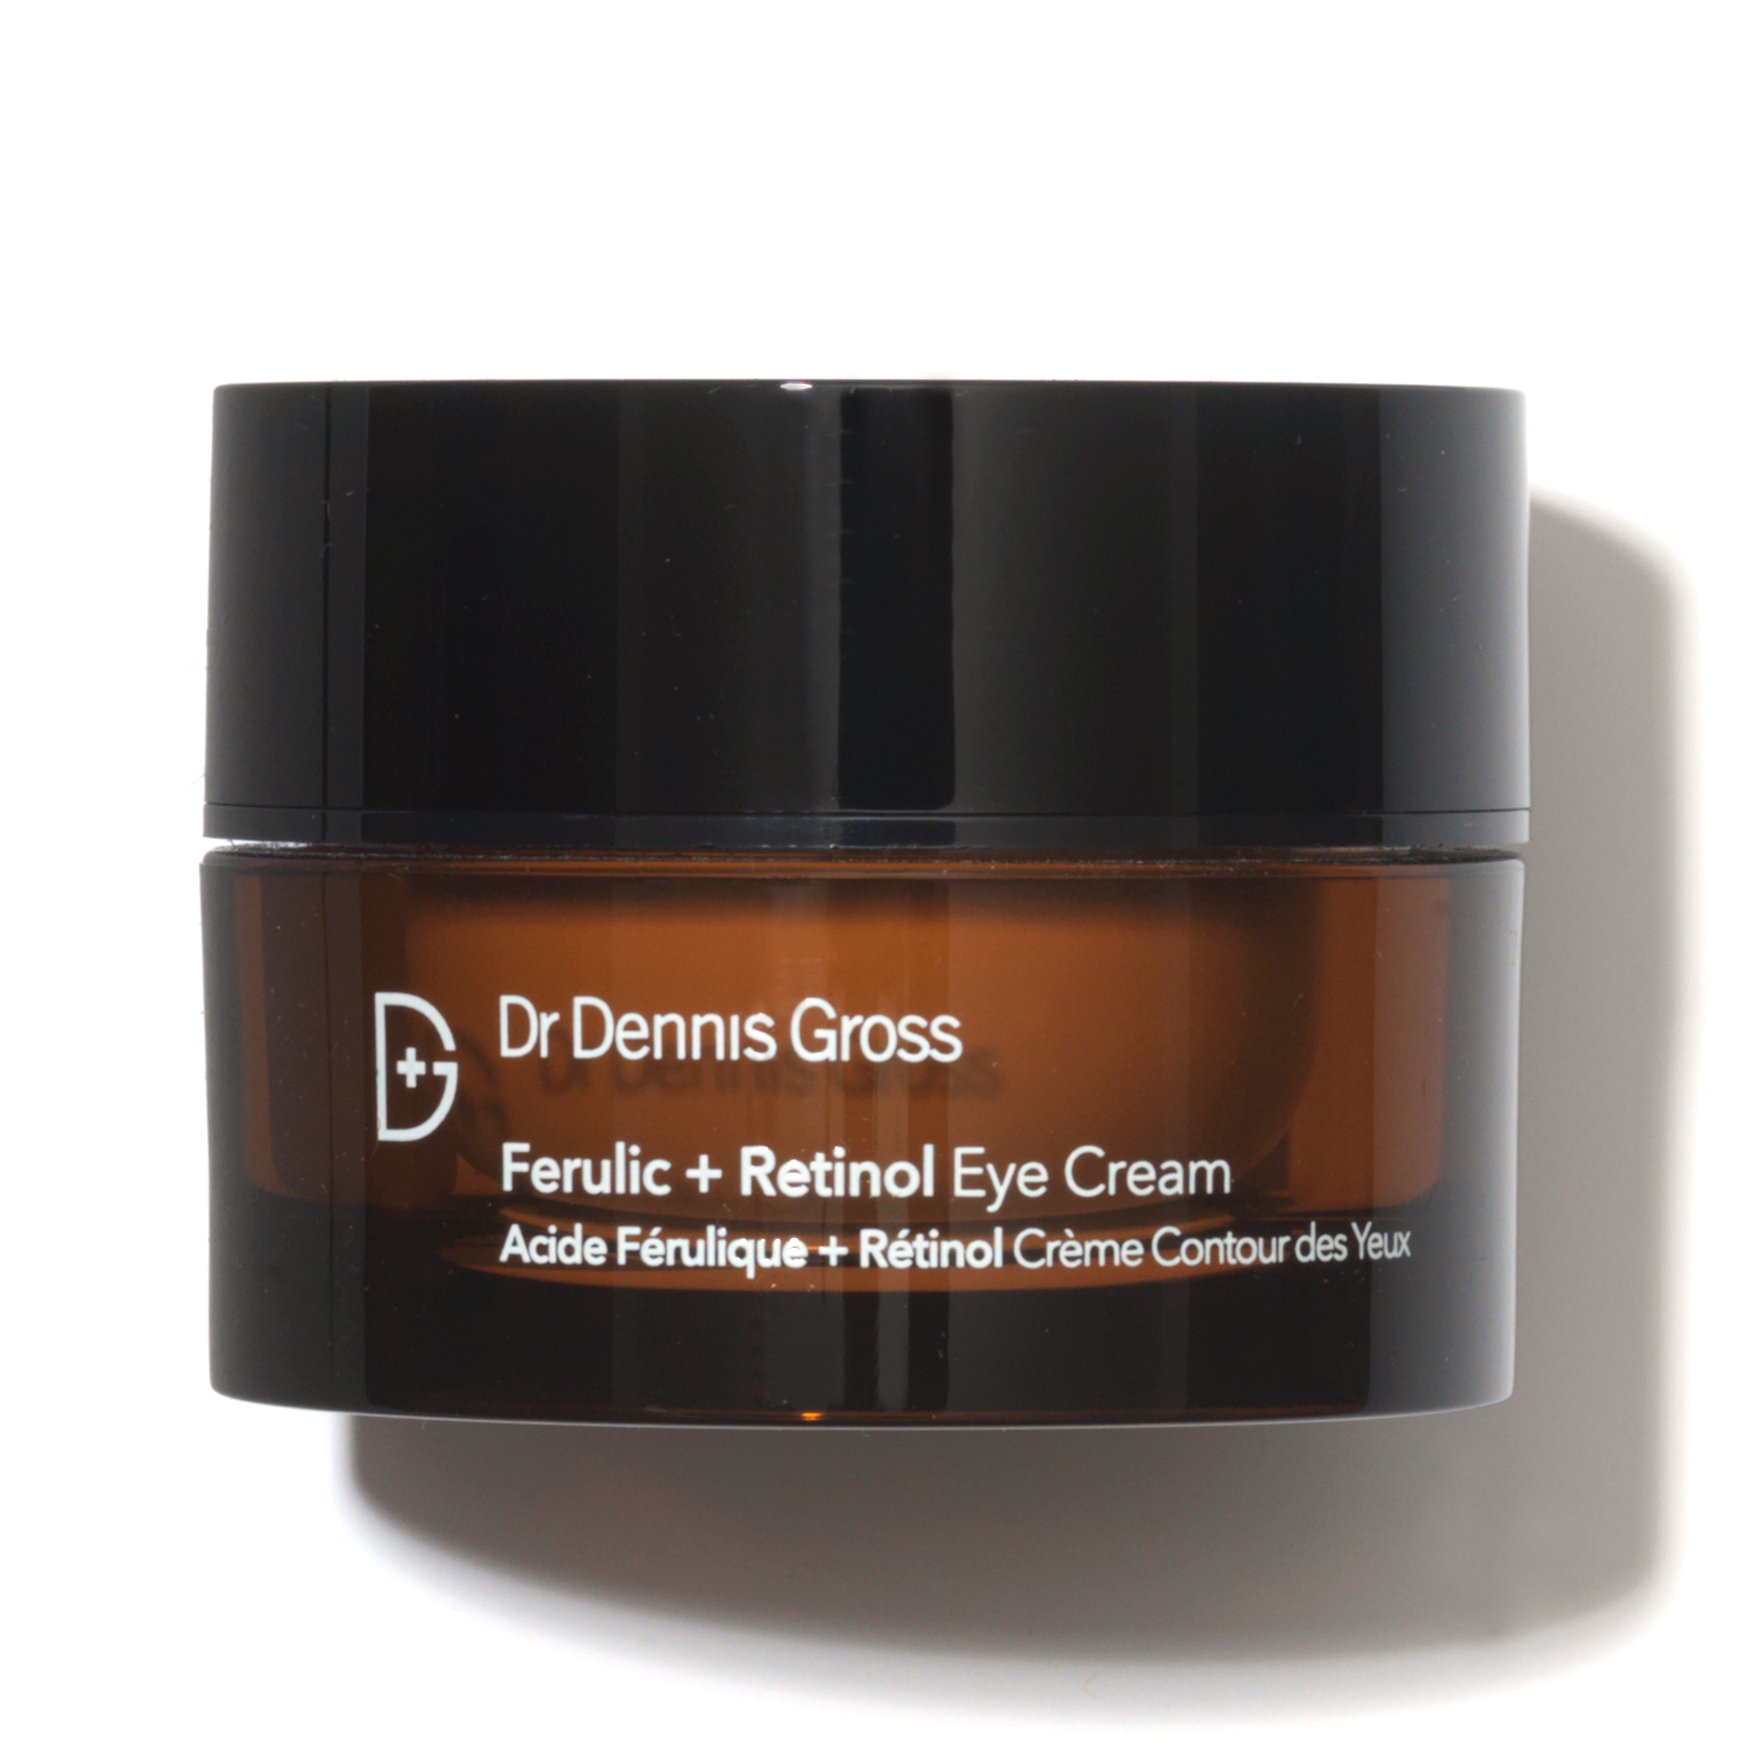 Best Retinol Eye Creams: Dr Dennis Gross Ferulic + Retinol Eye Cream